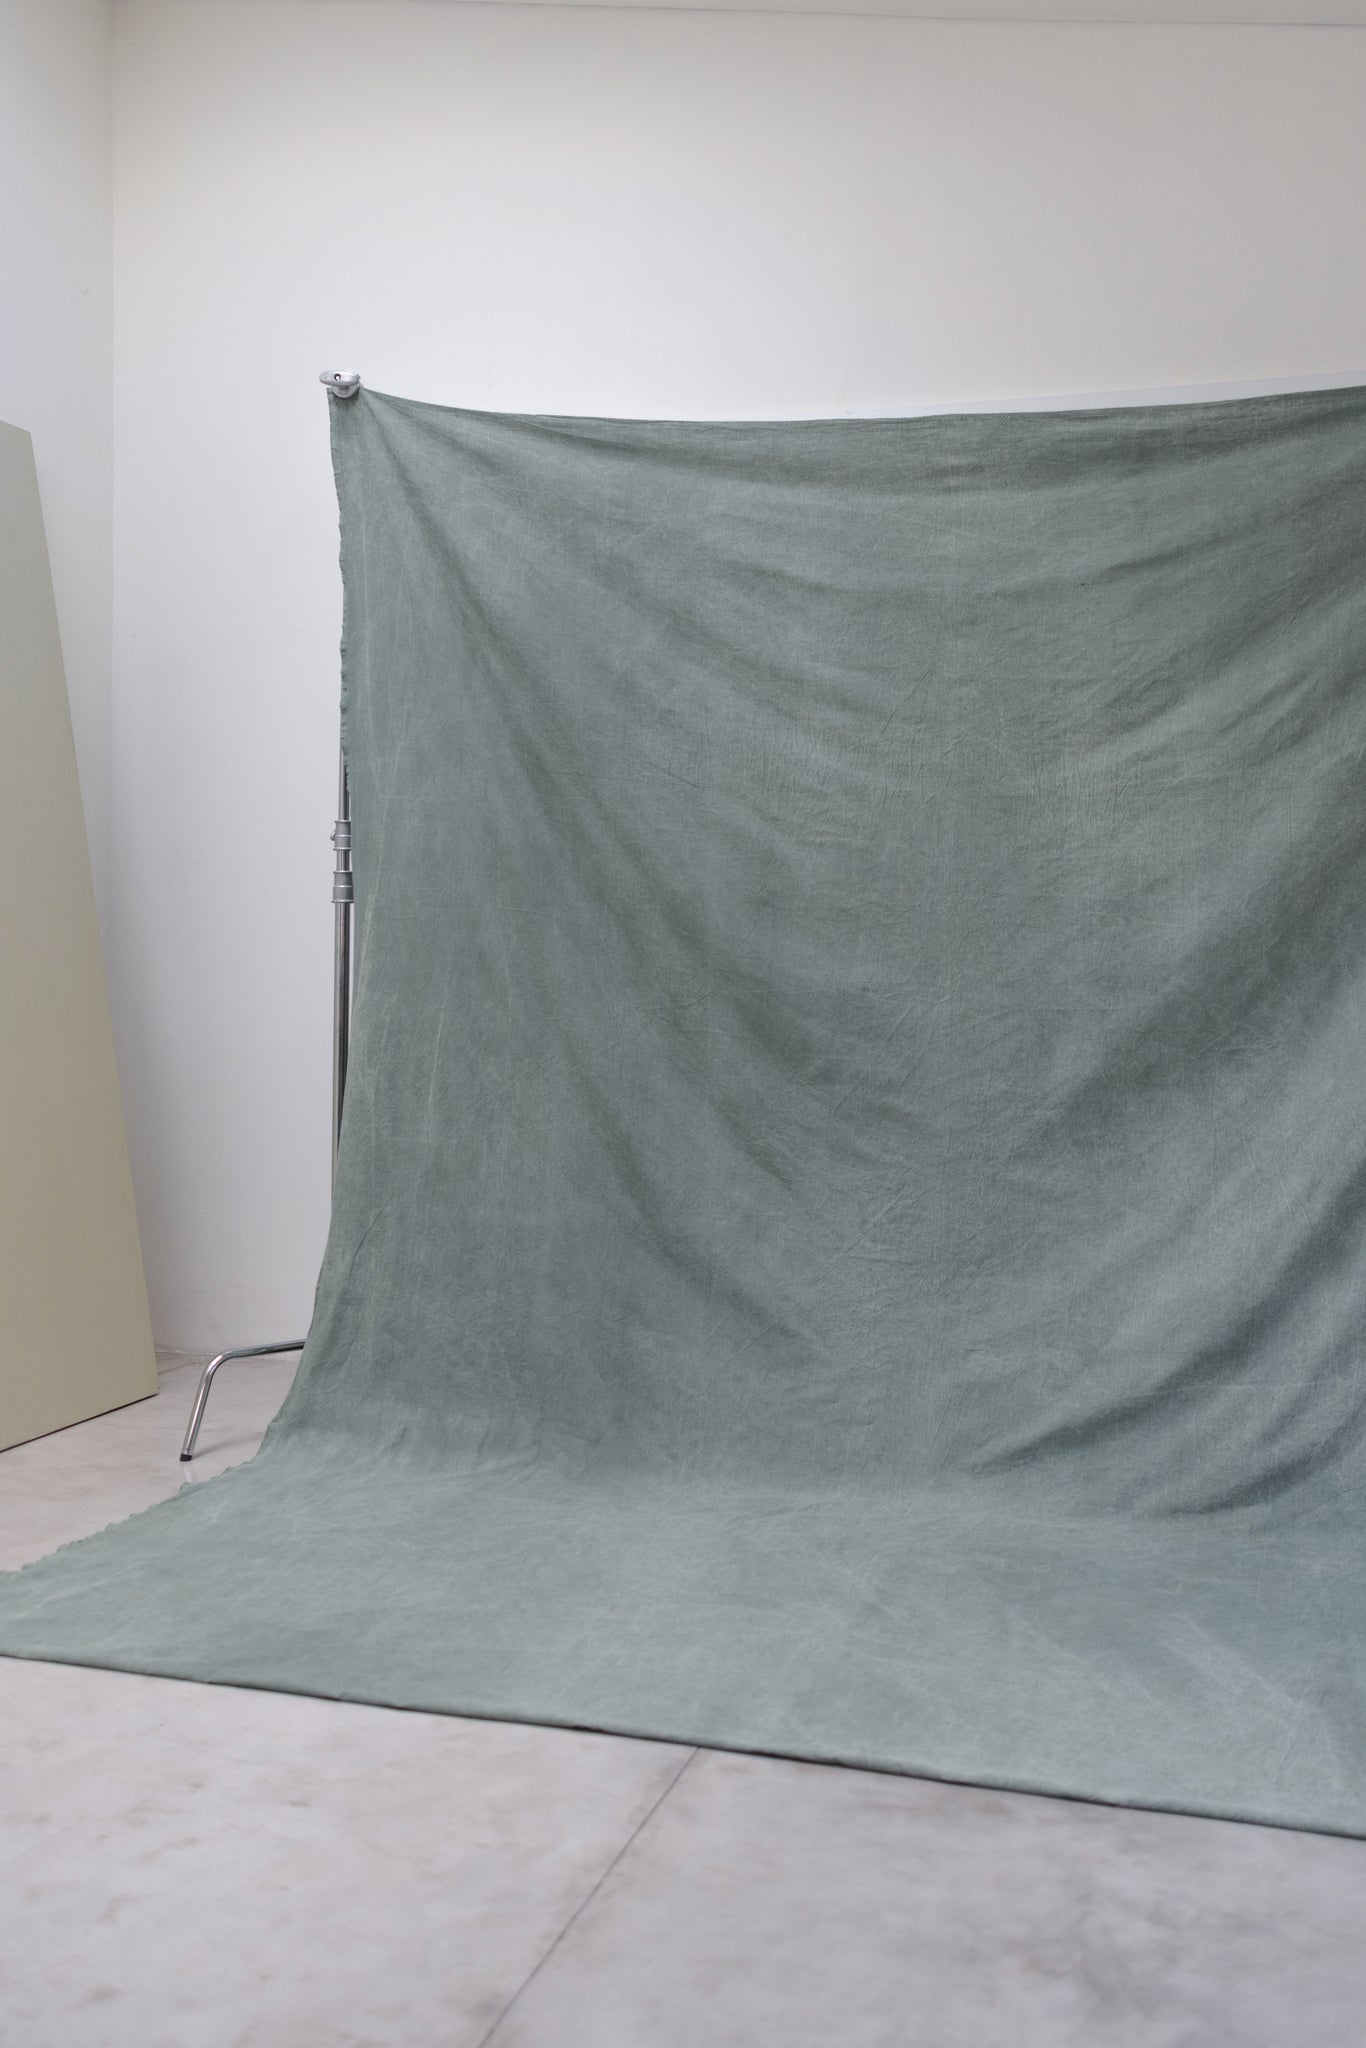 [3x6m] Canvas Backdrop Light Teal